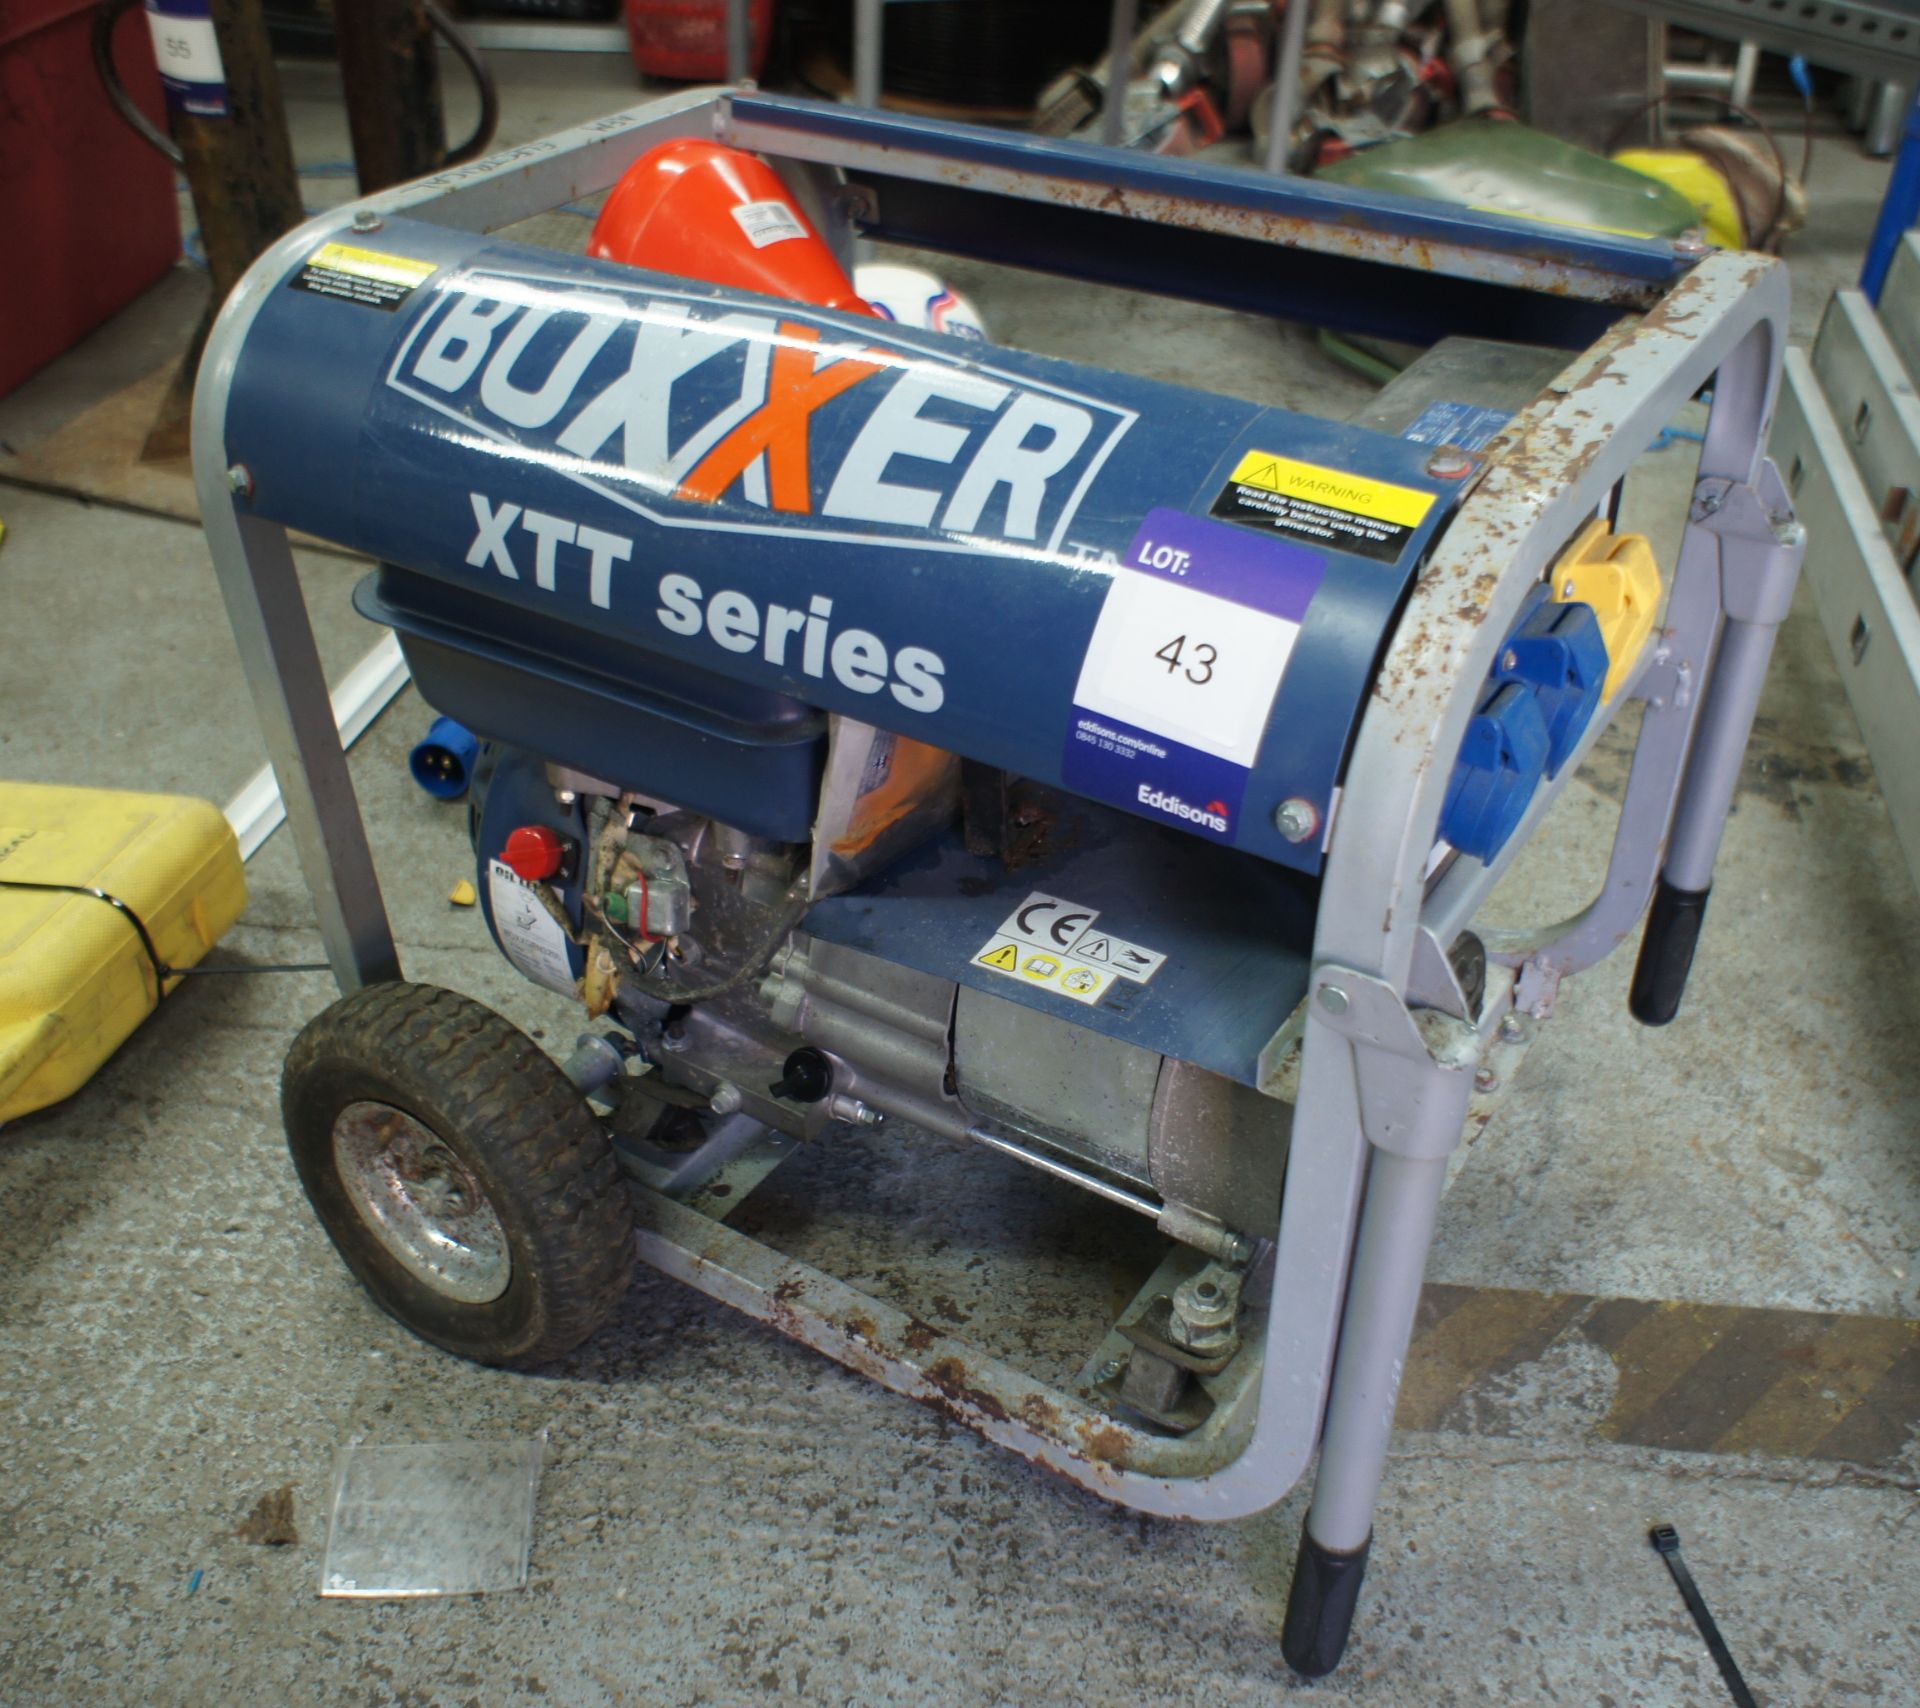 Boxxer XTT series Petrol Generator